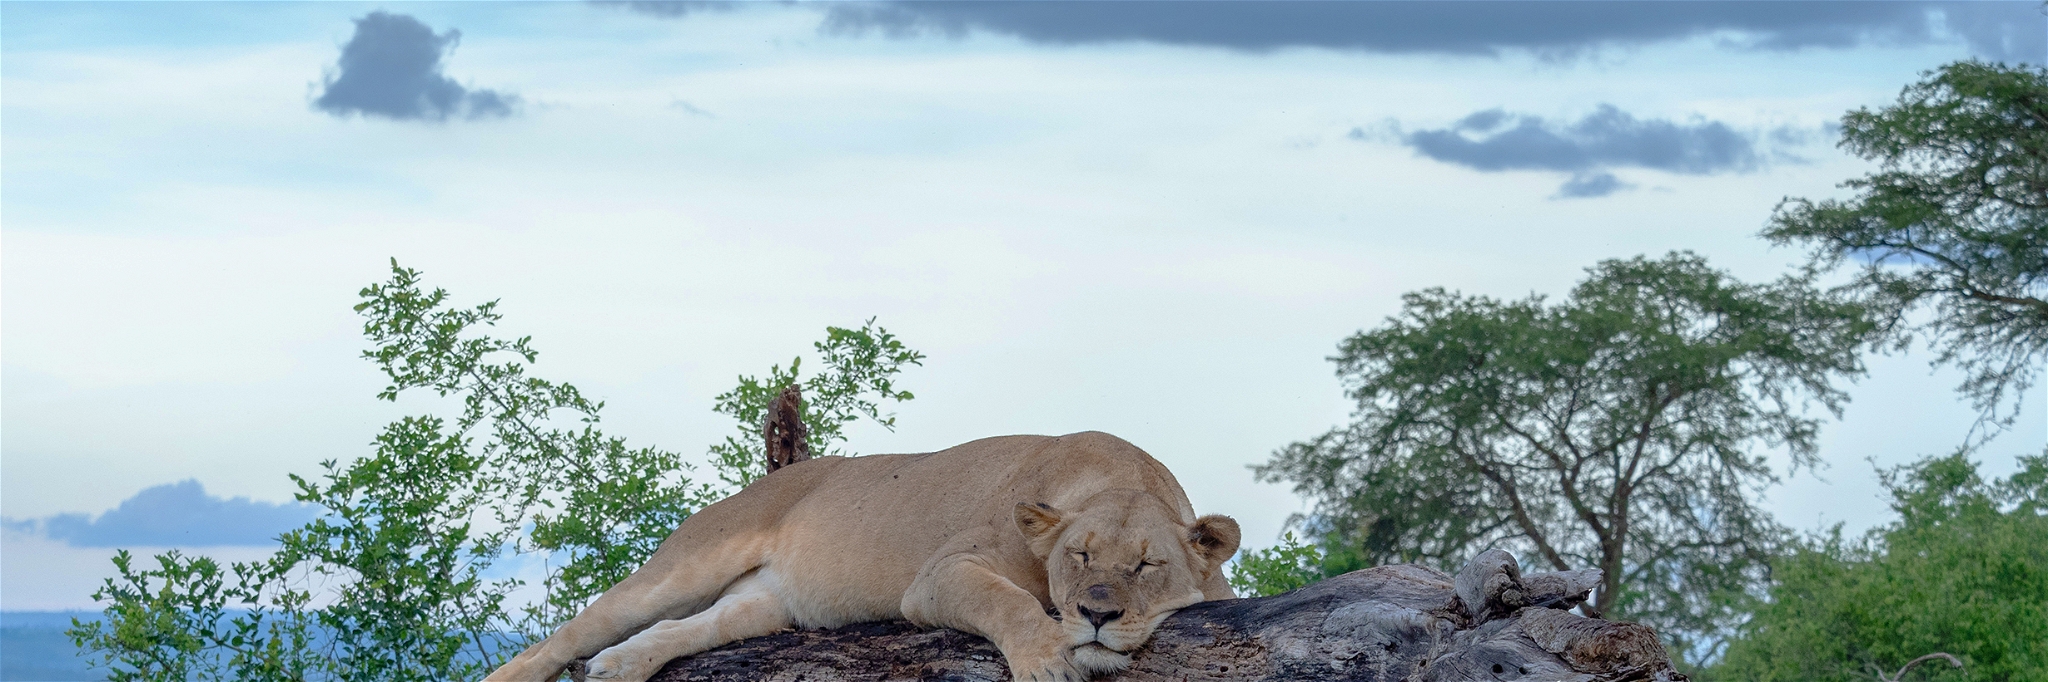 Lioness in Akagera National Park, Rwanda.